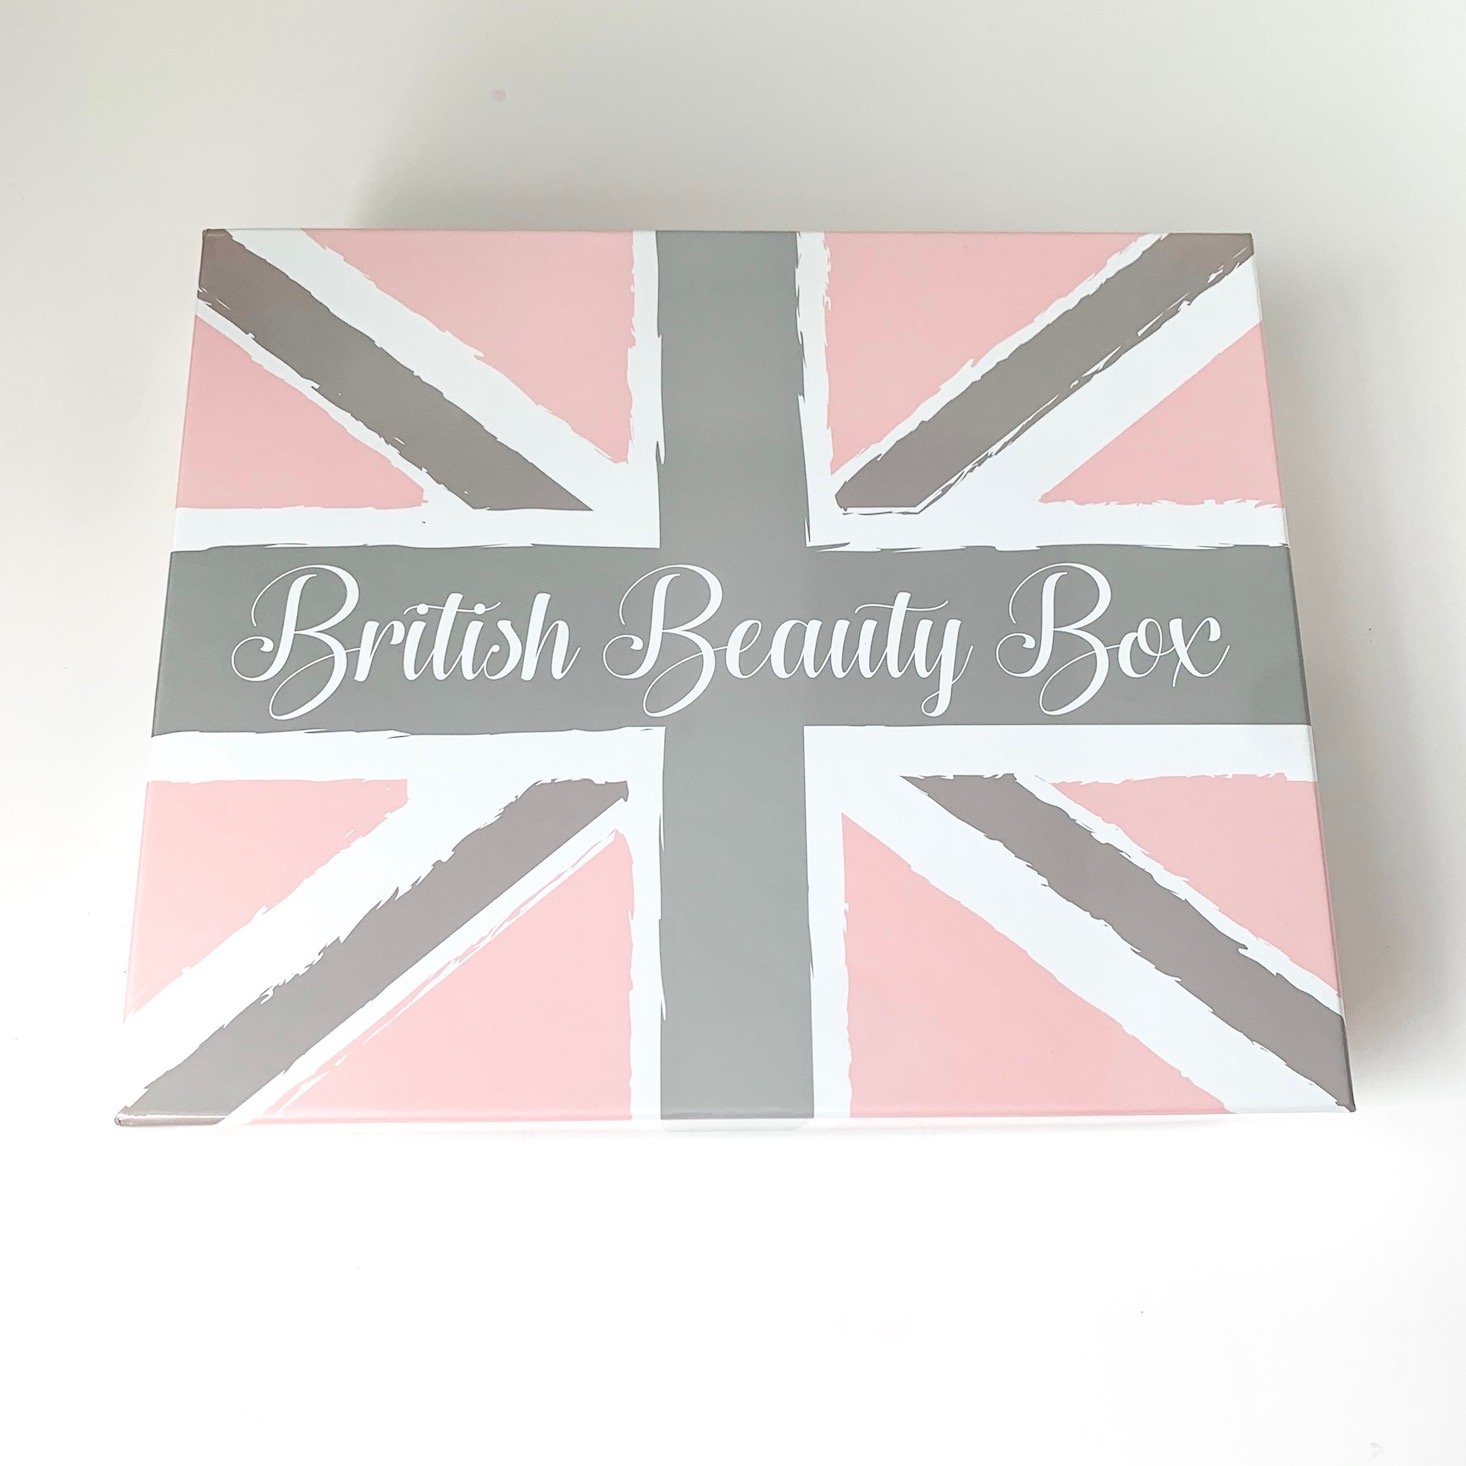 British Beauty Box “The Birthday Box” Review – Fall 2019